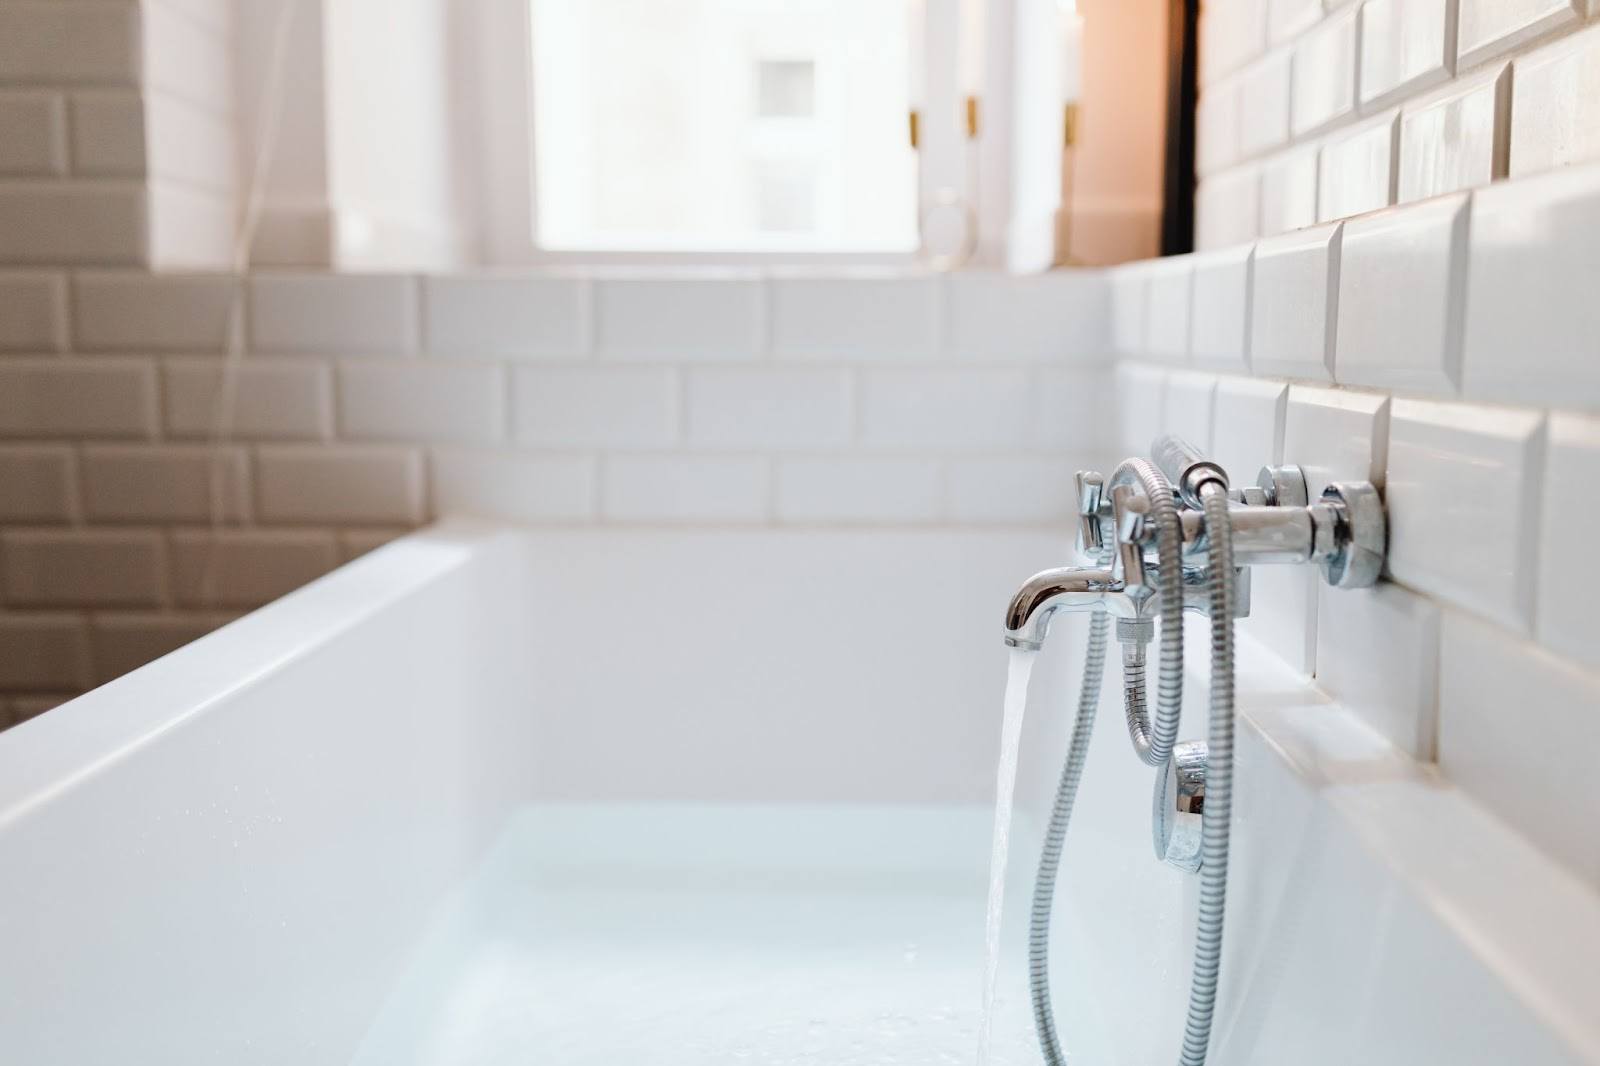 stainless-steel-faucet-mounted-on-ceramic-tiles-customer satisfaction plumbing business